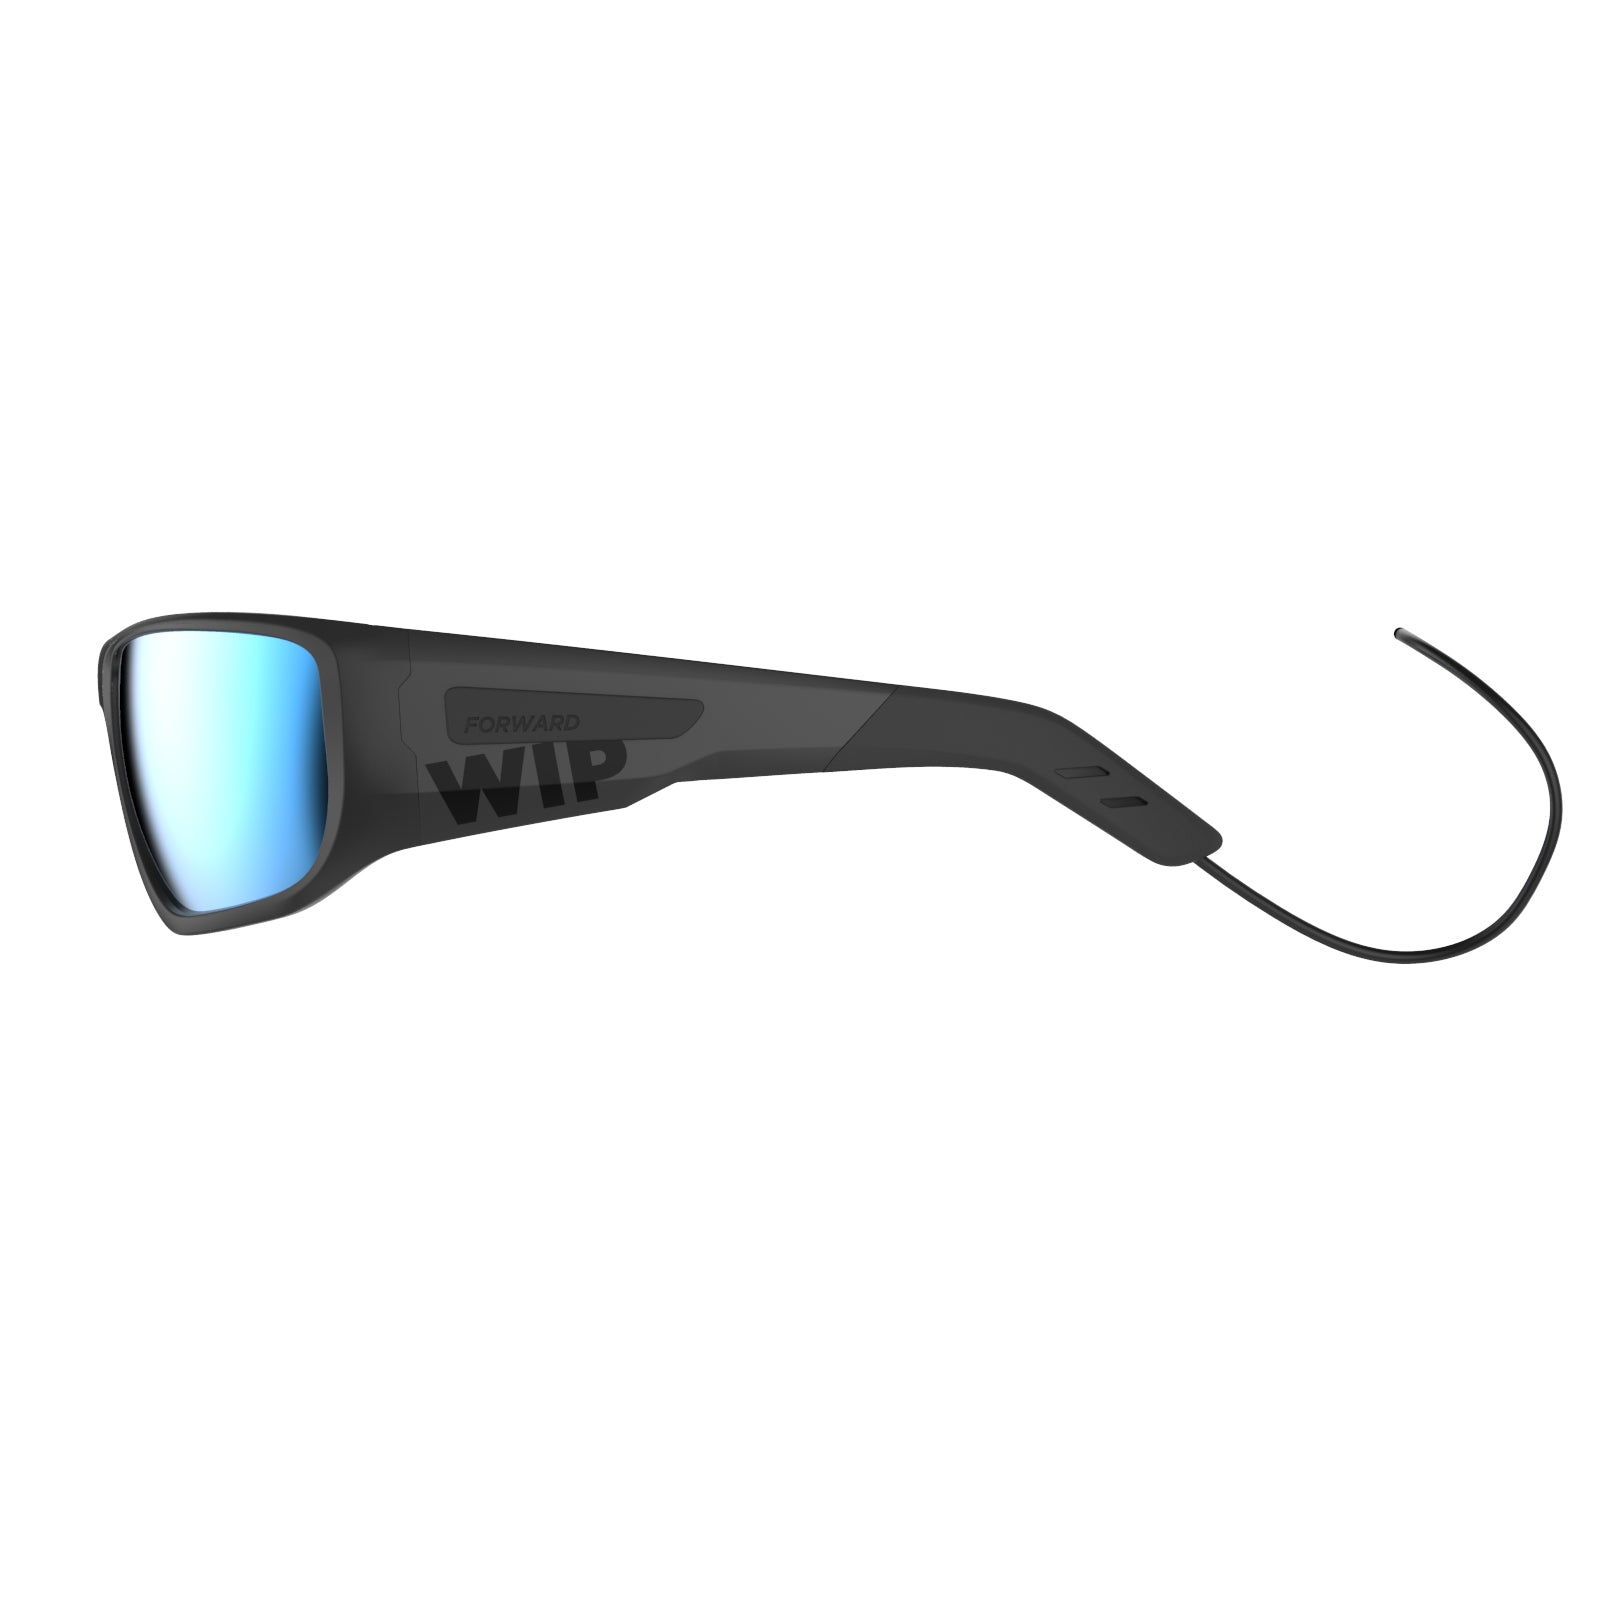 Gust Evo Sunglasses BL/ BL Lens XL